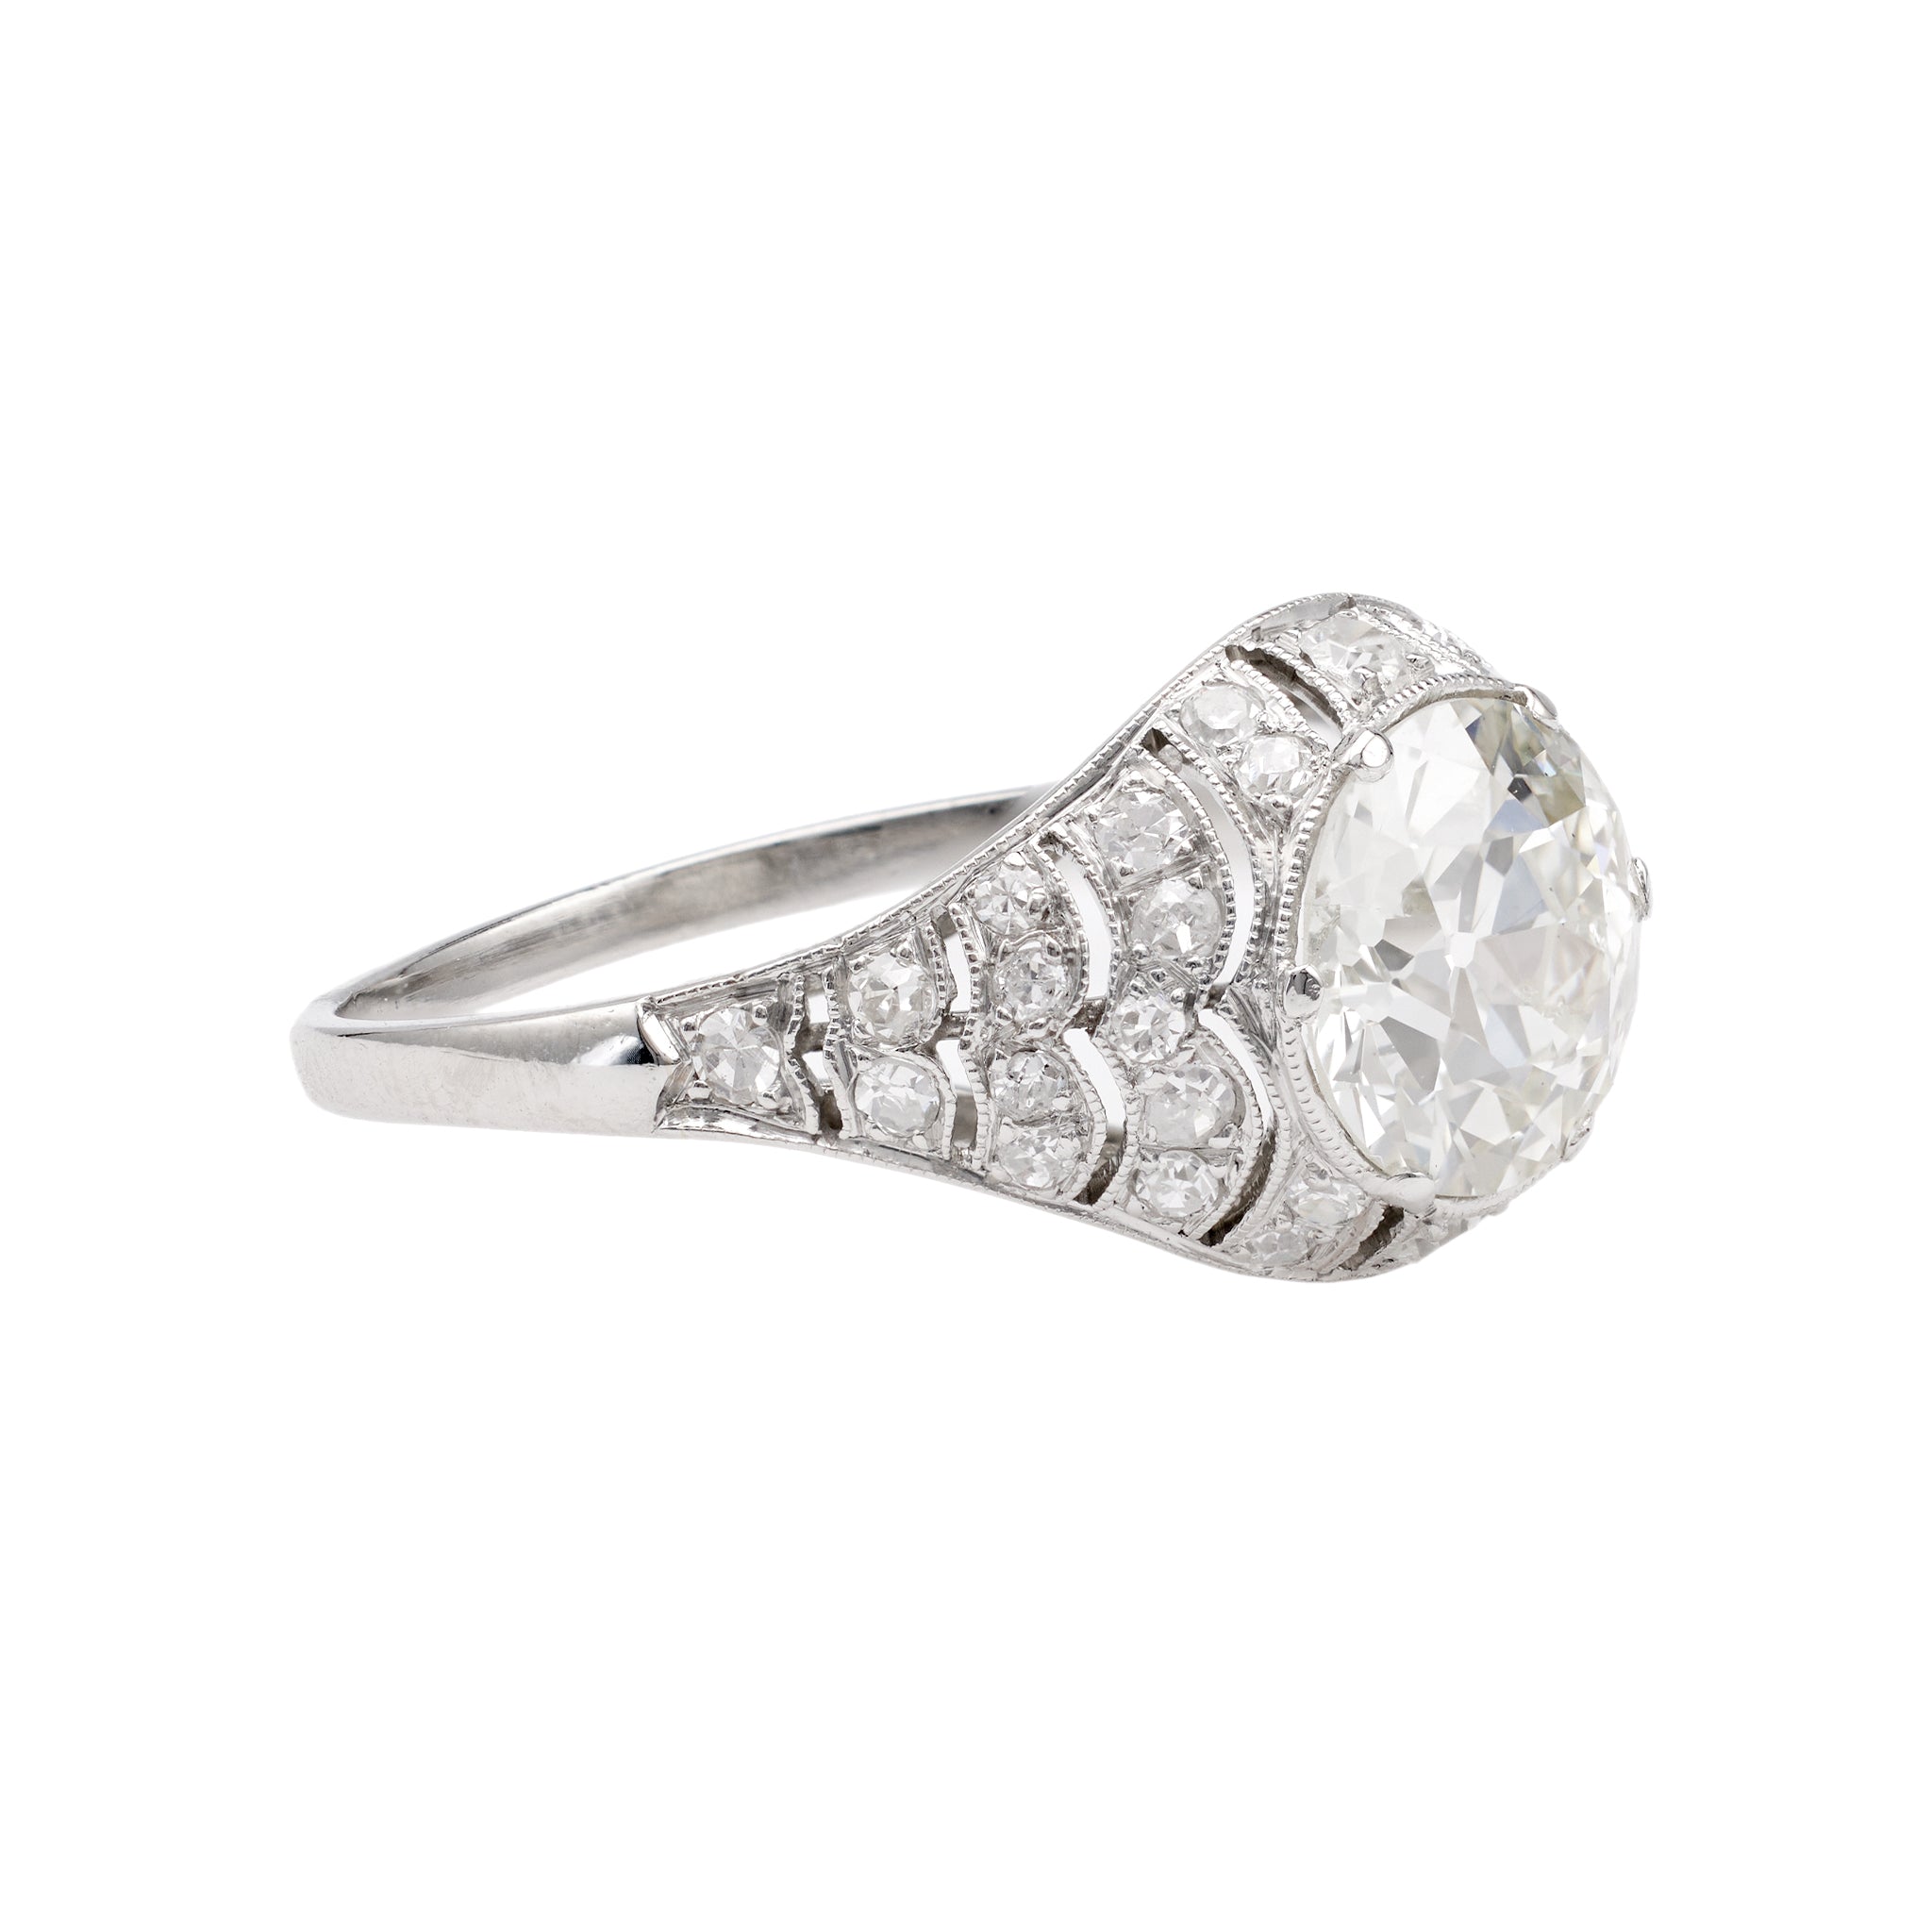 Vintage Art Deco Inspired Polish GIA 1.82 Carat Old European Cut Diamond Platinum Ring Rings Jack Weir & Sons   